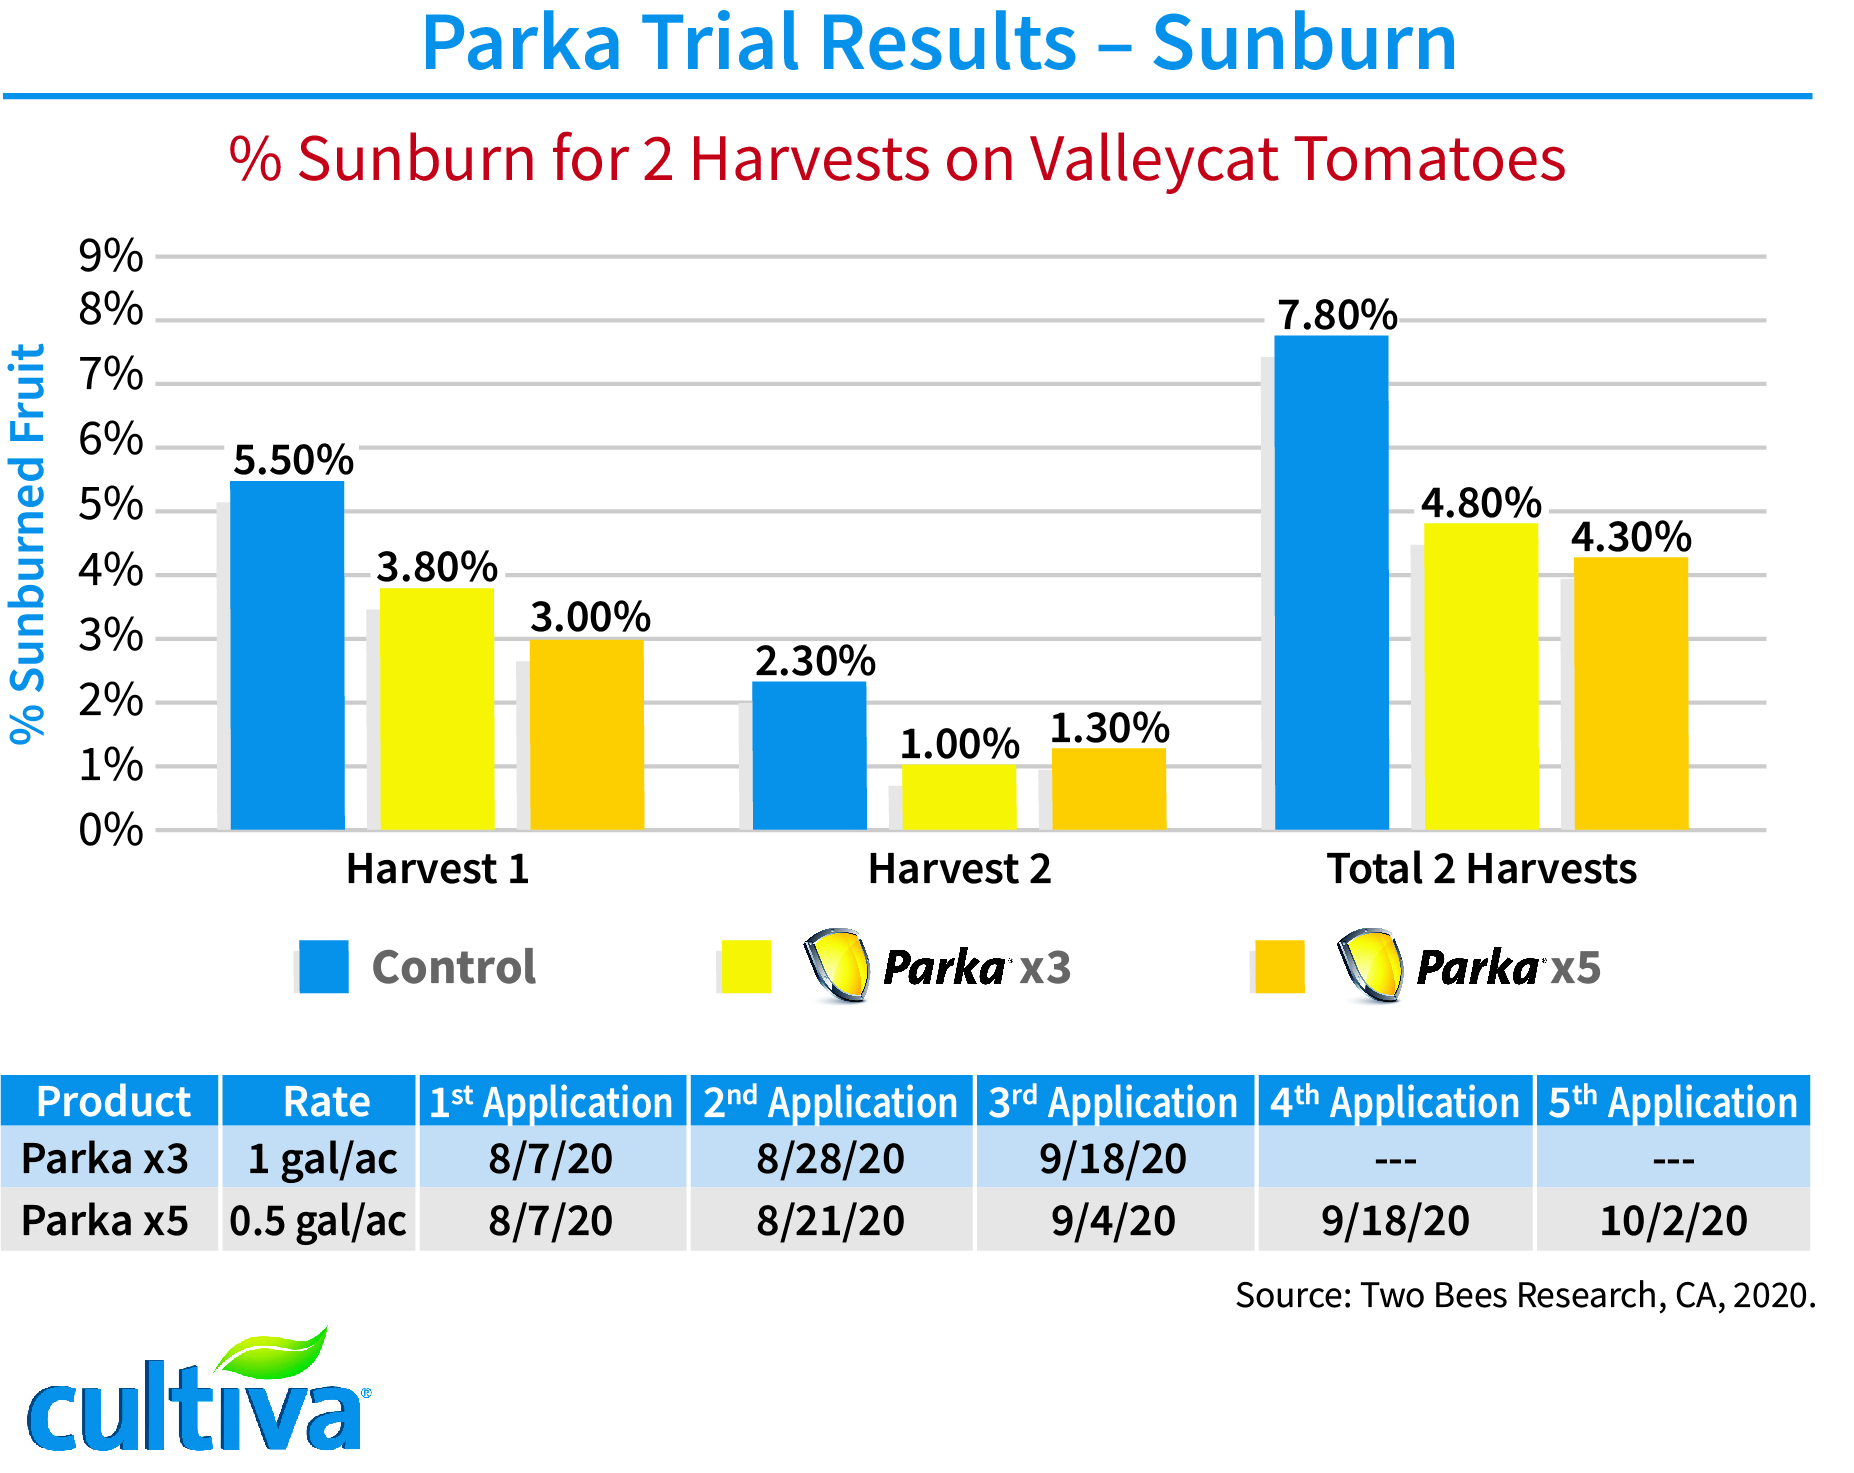 parka trial results of sunburn